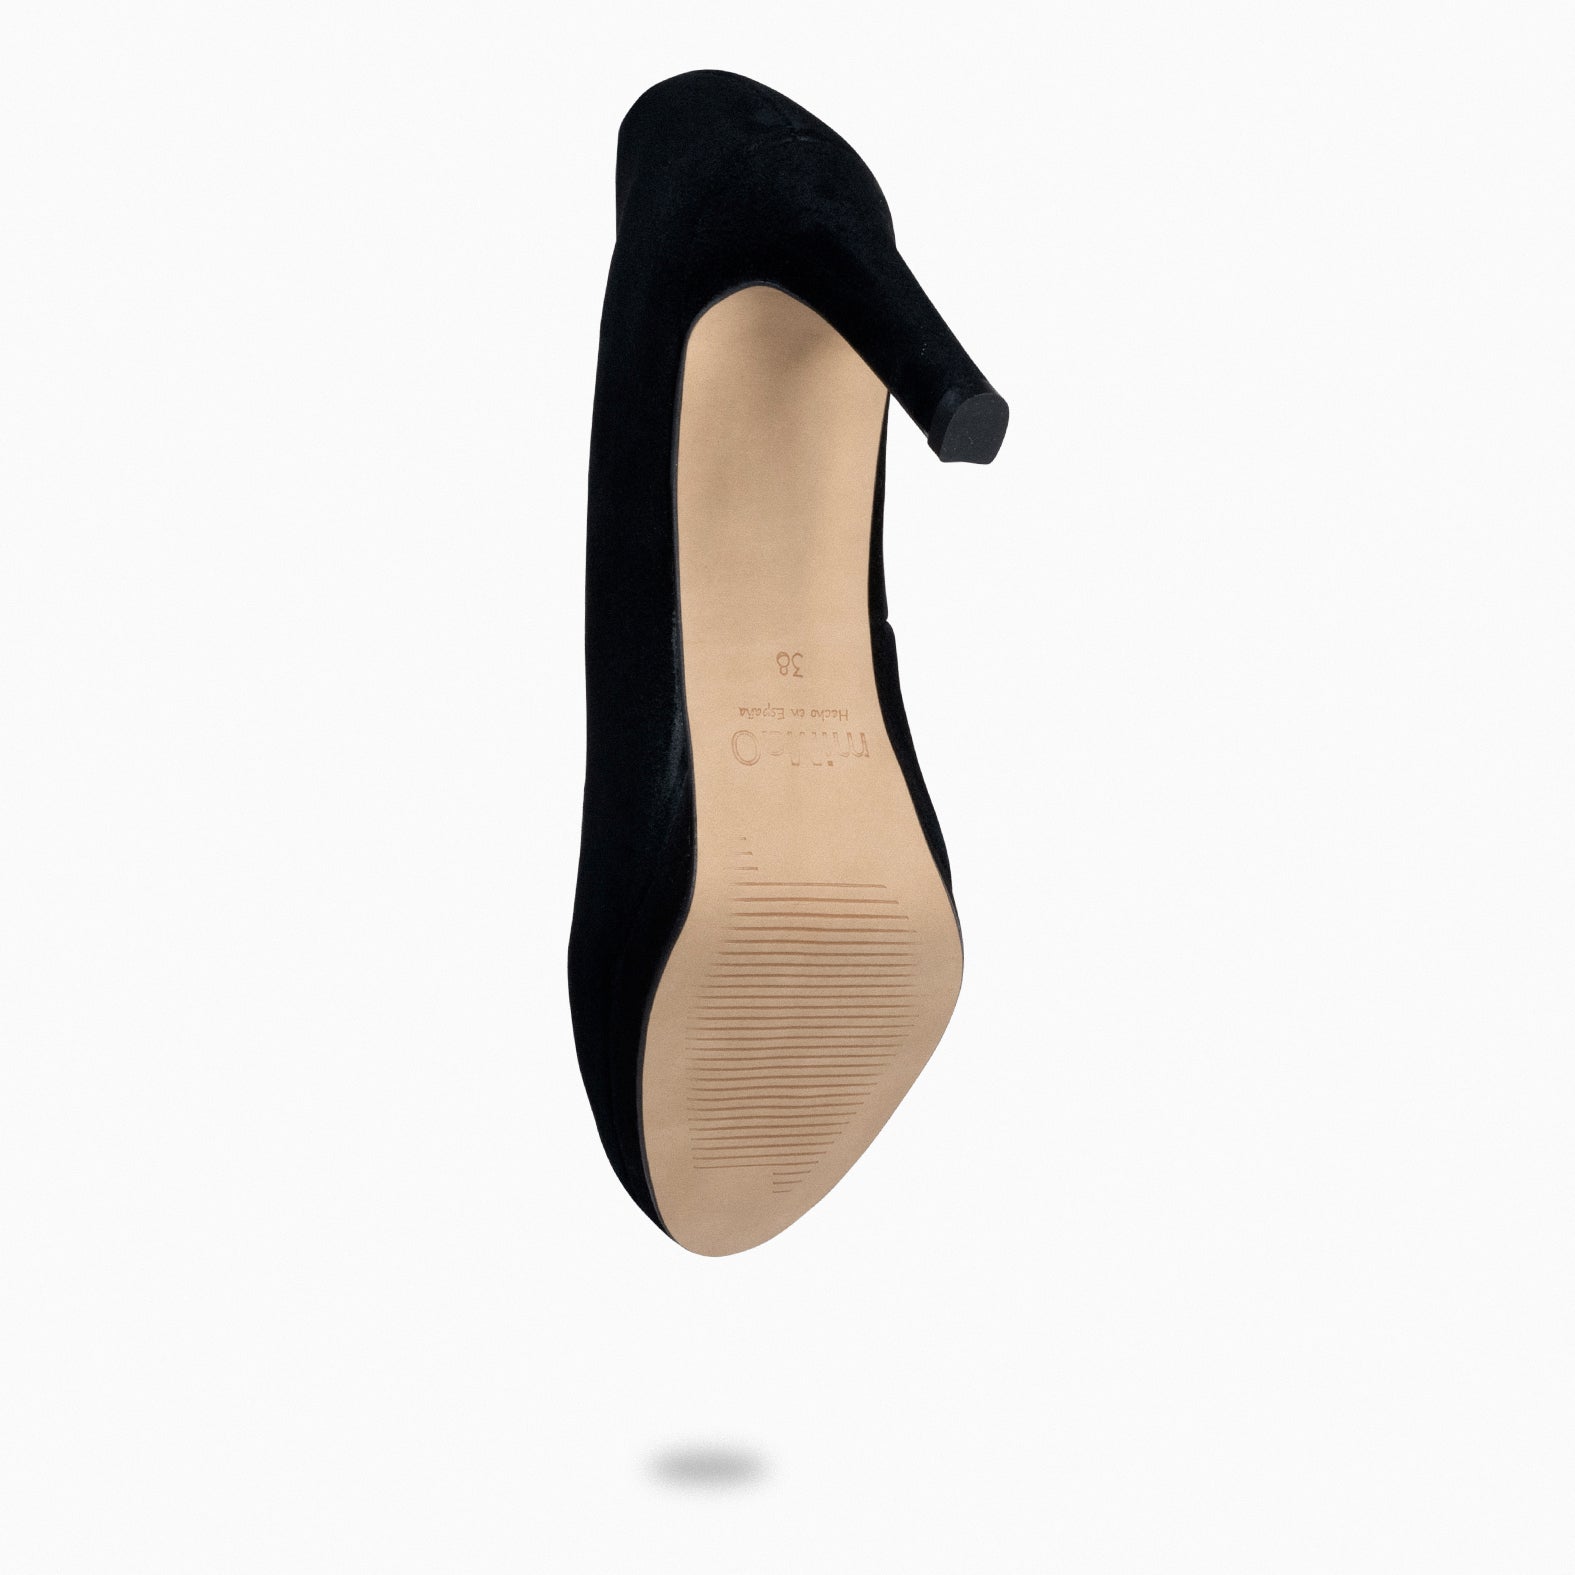 PLATFORM – BLACK high heels with platform